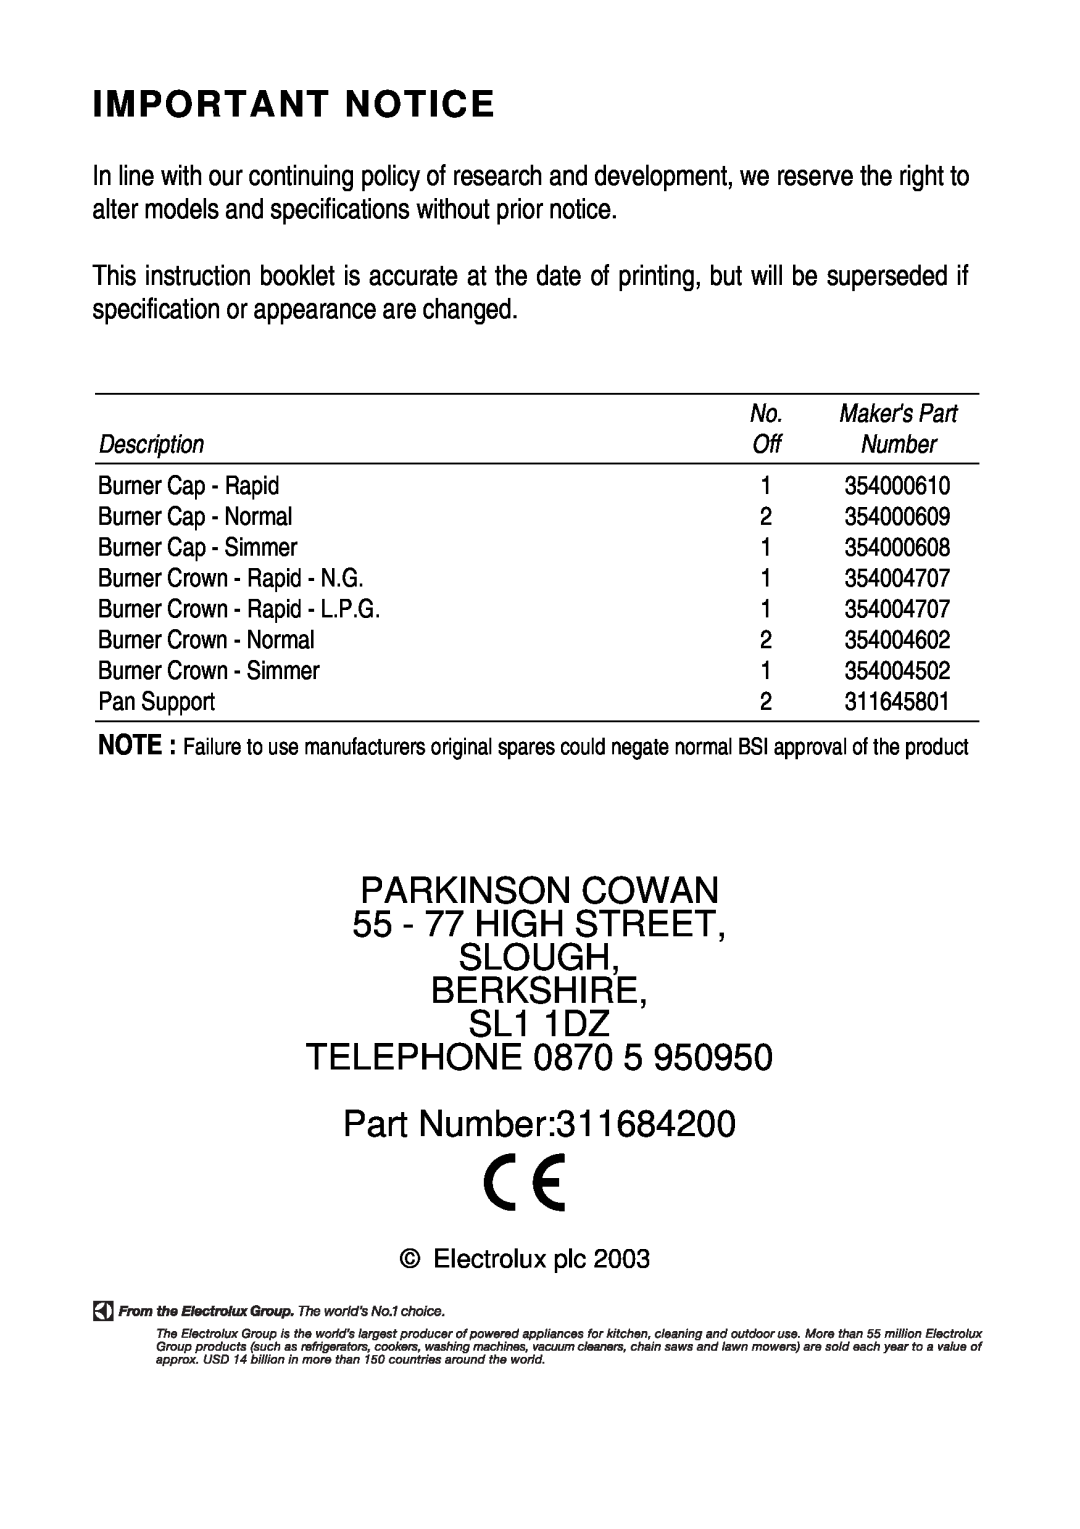 Electrolux SG 424 installation instructions Important Notice, PARKINSON COWAN 55 - 77 HIGH STREET SLOUGH BERKSHIRE SL1 1DZ 